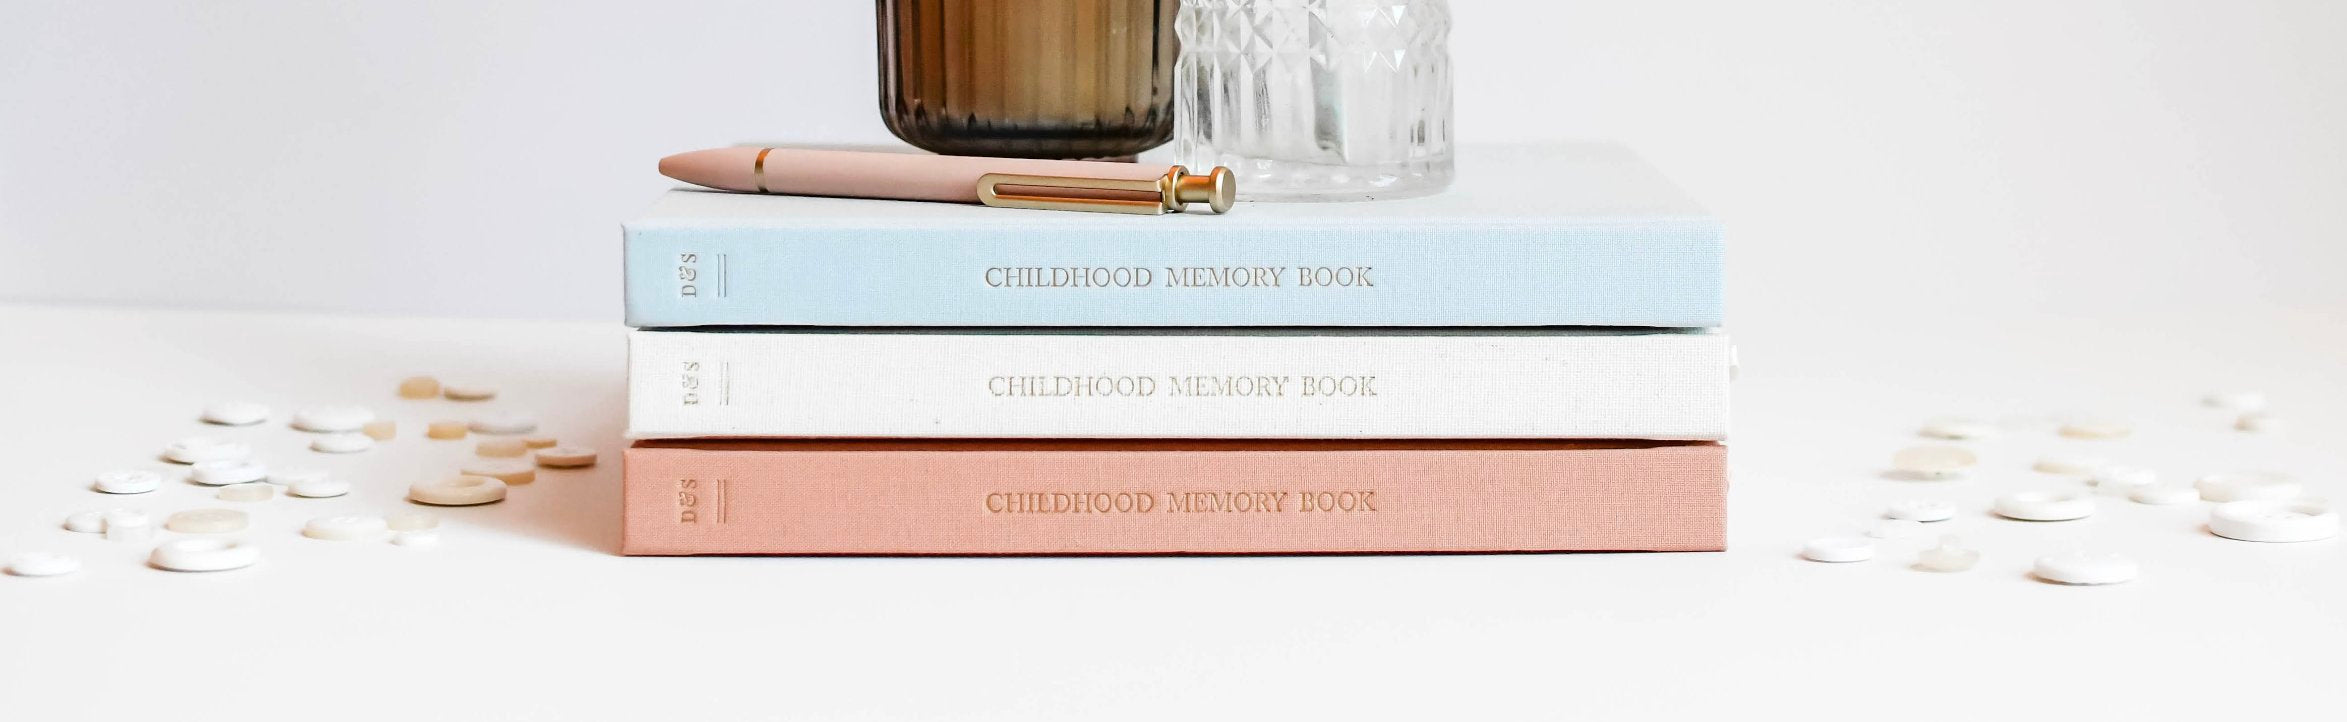 Children's Memory Books